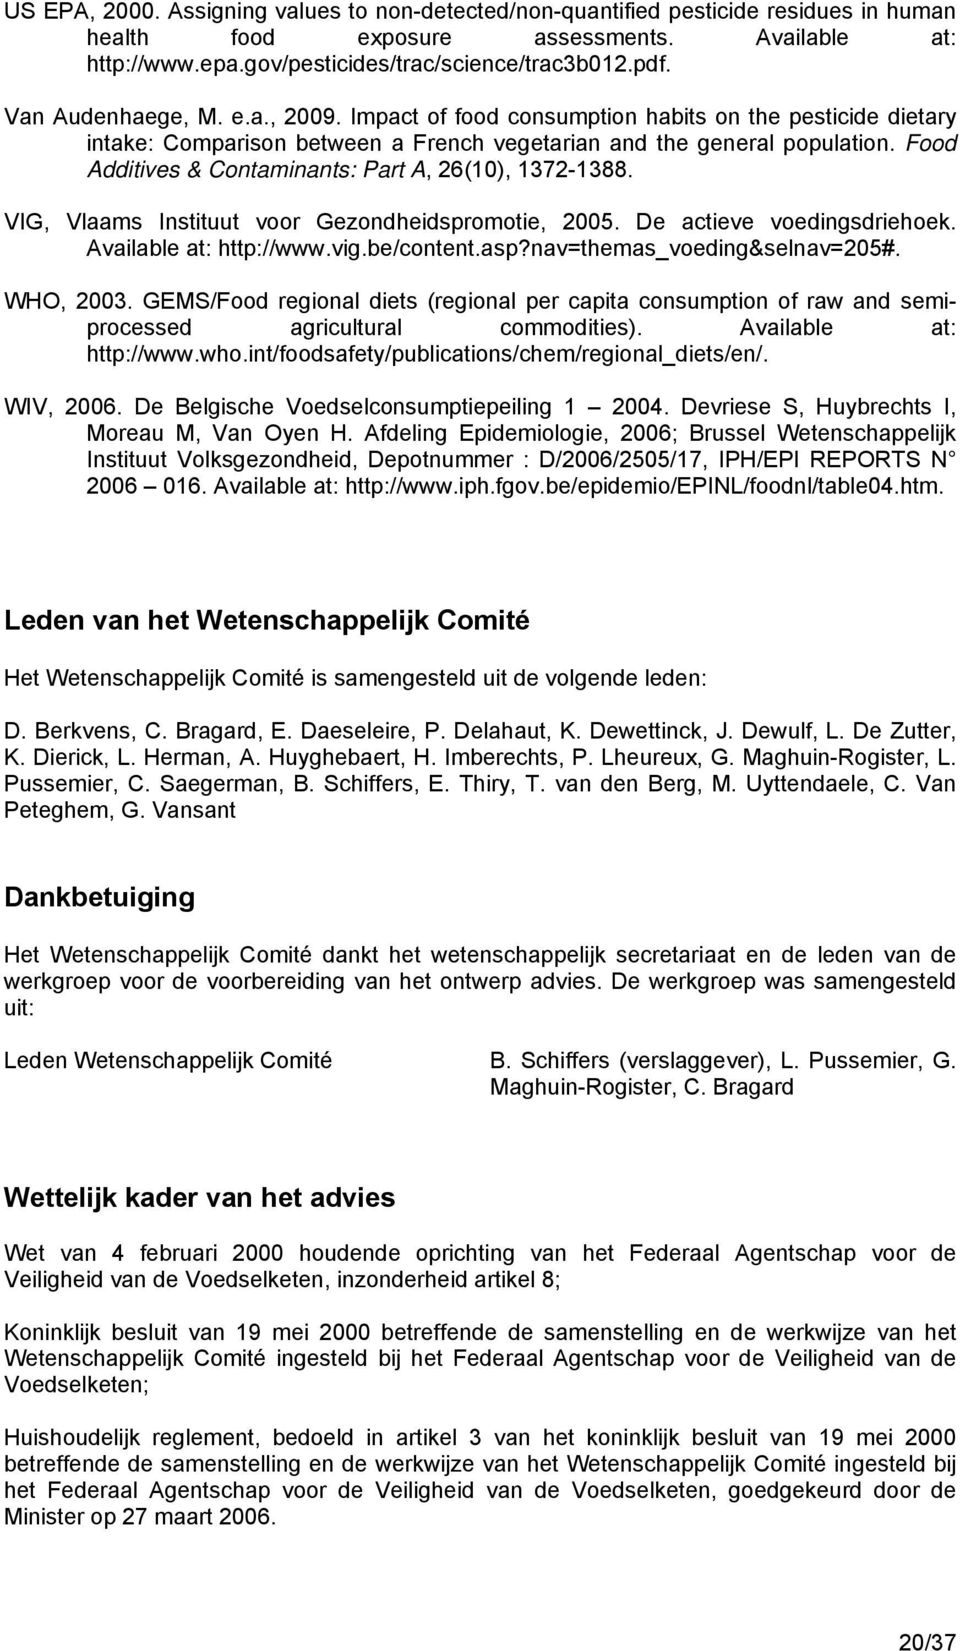 Food Additives & Contaminants: Part A, 26(10), 1372-1388. VIG, Vlaams Instituut voor Gezondheidspromotie, 2005. De actieve voedingsdriehoek. Available at: http://www.vig.be/content.asp?